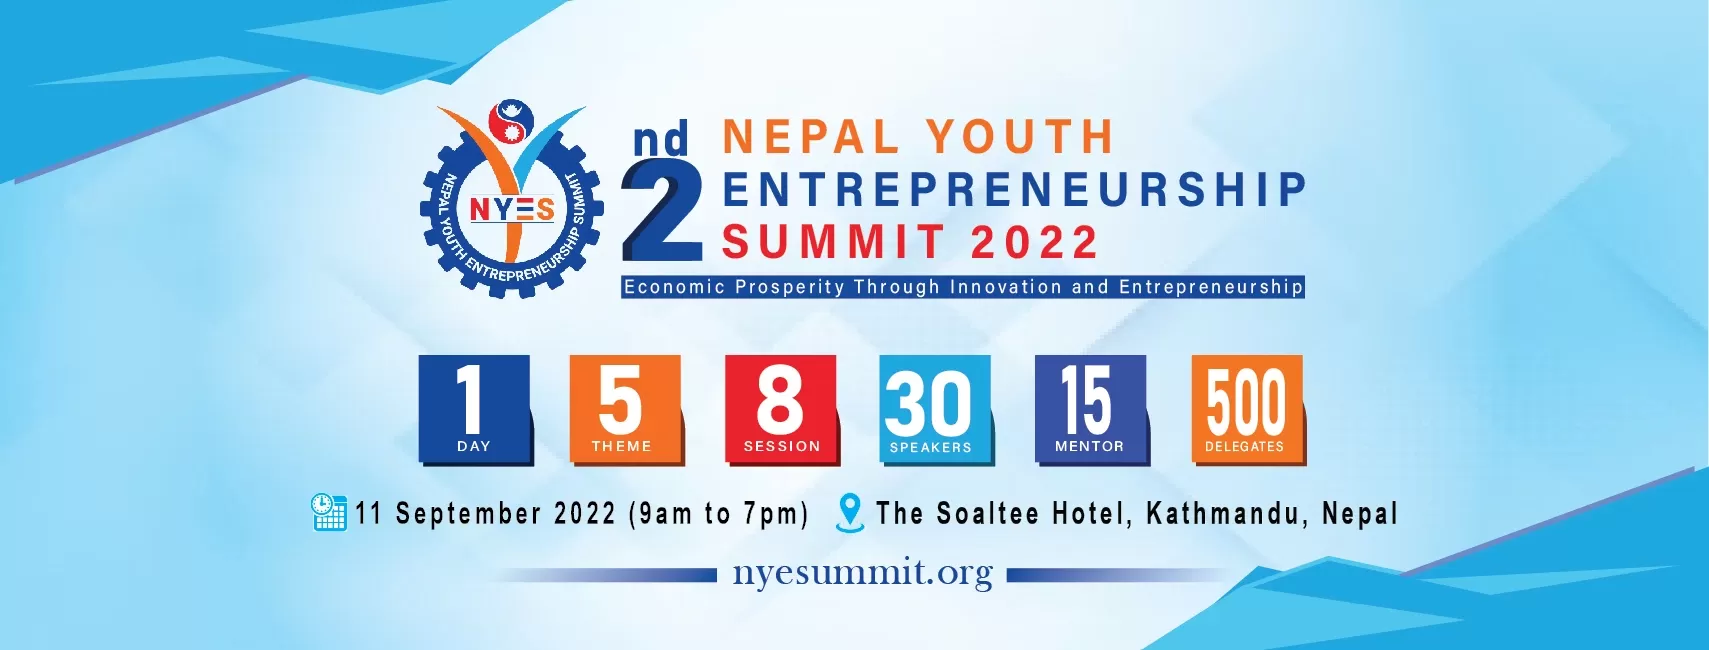 Nepal Youth Entrepreneurship Summit 2022 at The Soaltee Hotel, Kathmandu